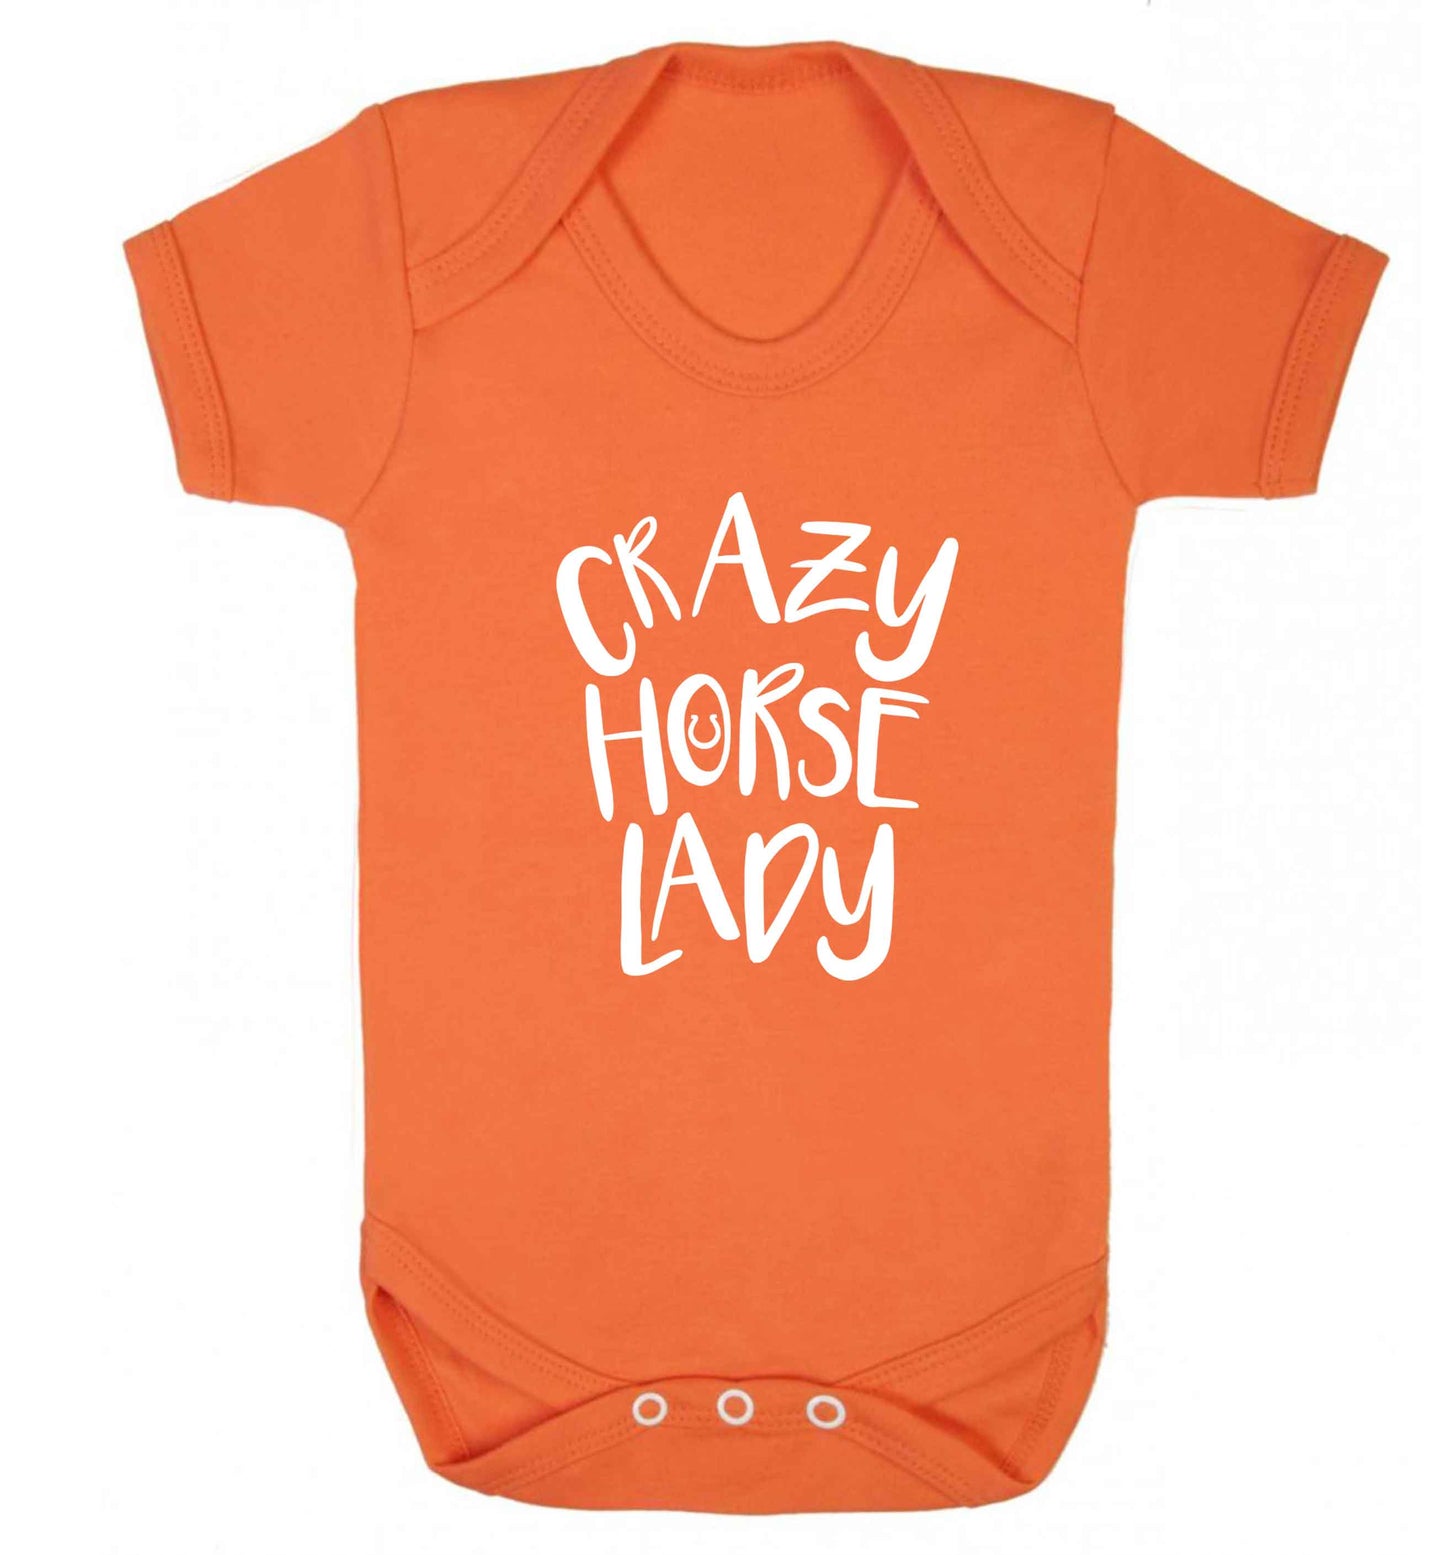 Crazy horse lady baby vest orange 18-24 months